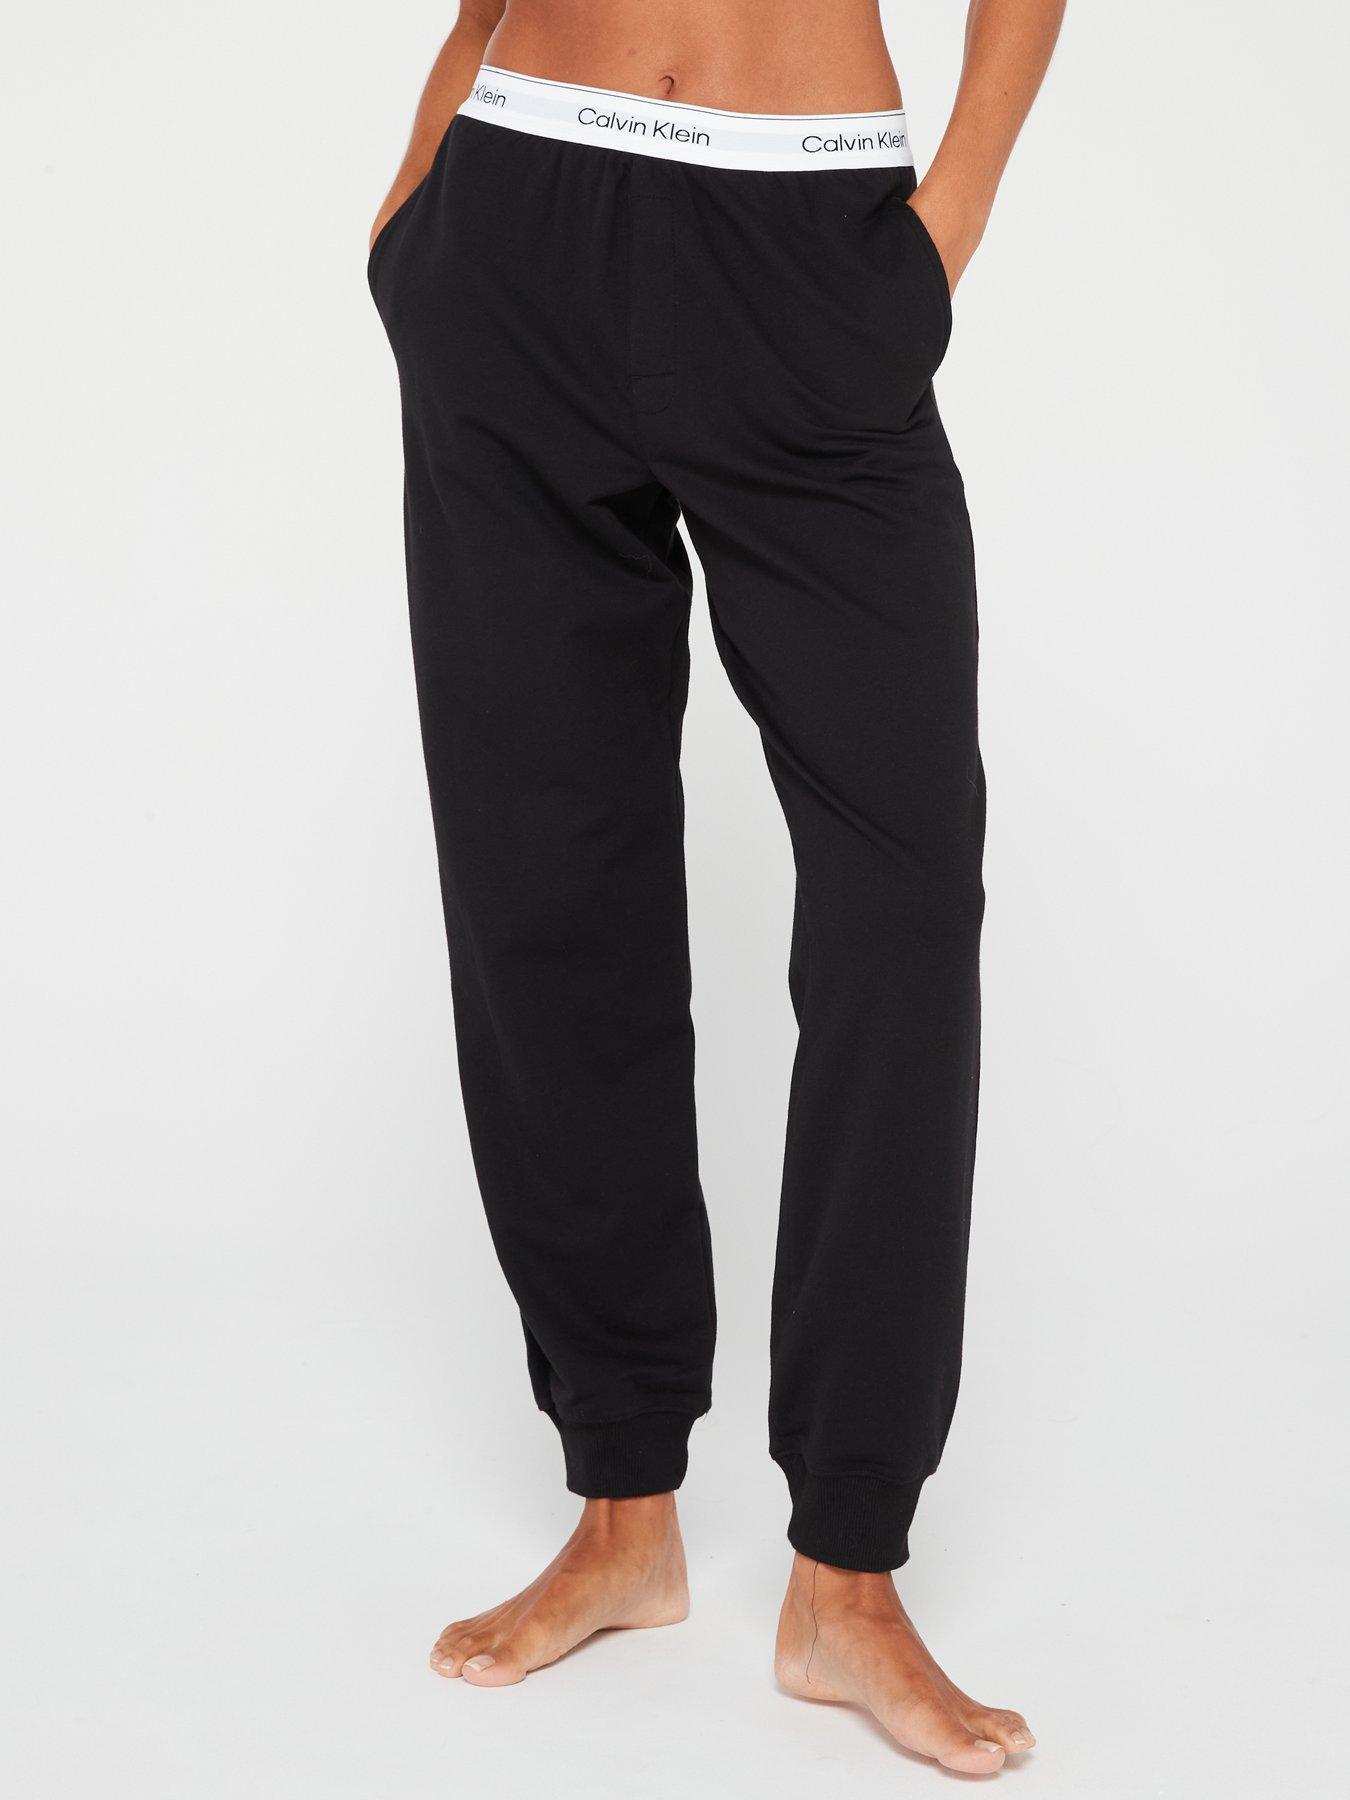 Main Collection, Calvin klein, Trousers & leggings, Women